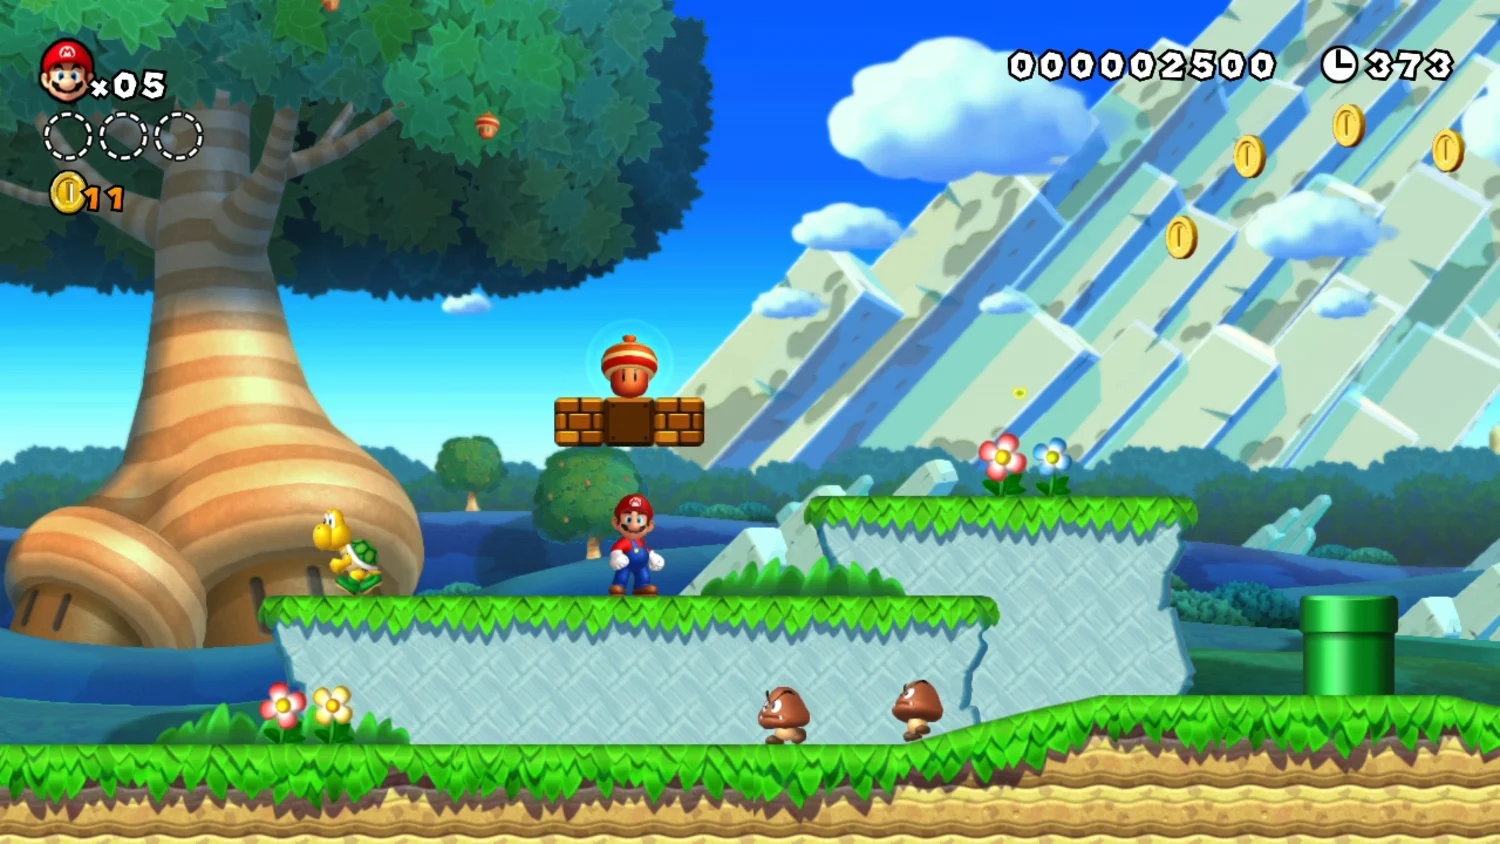 Jogo New Super Mario Bros U Deluxe Nintendo Switch